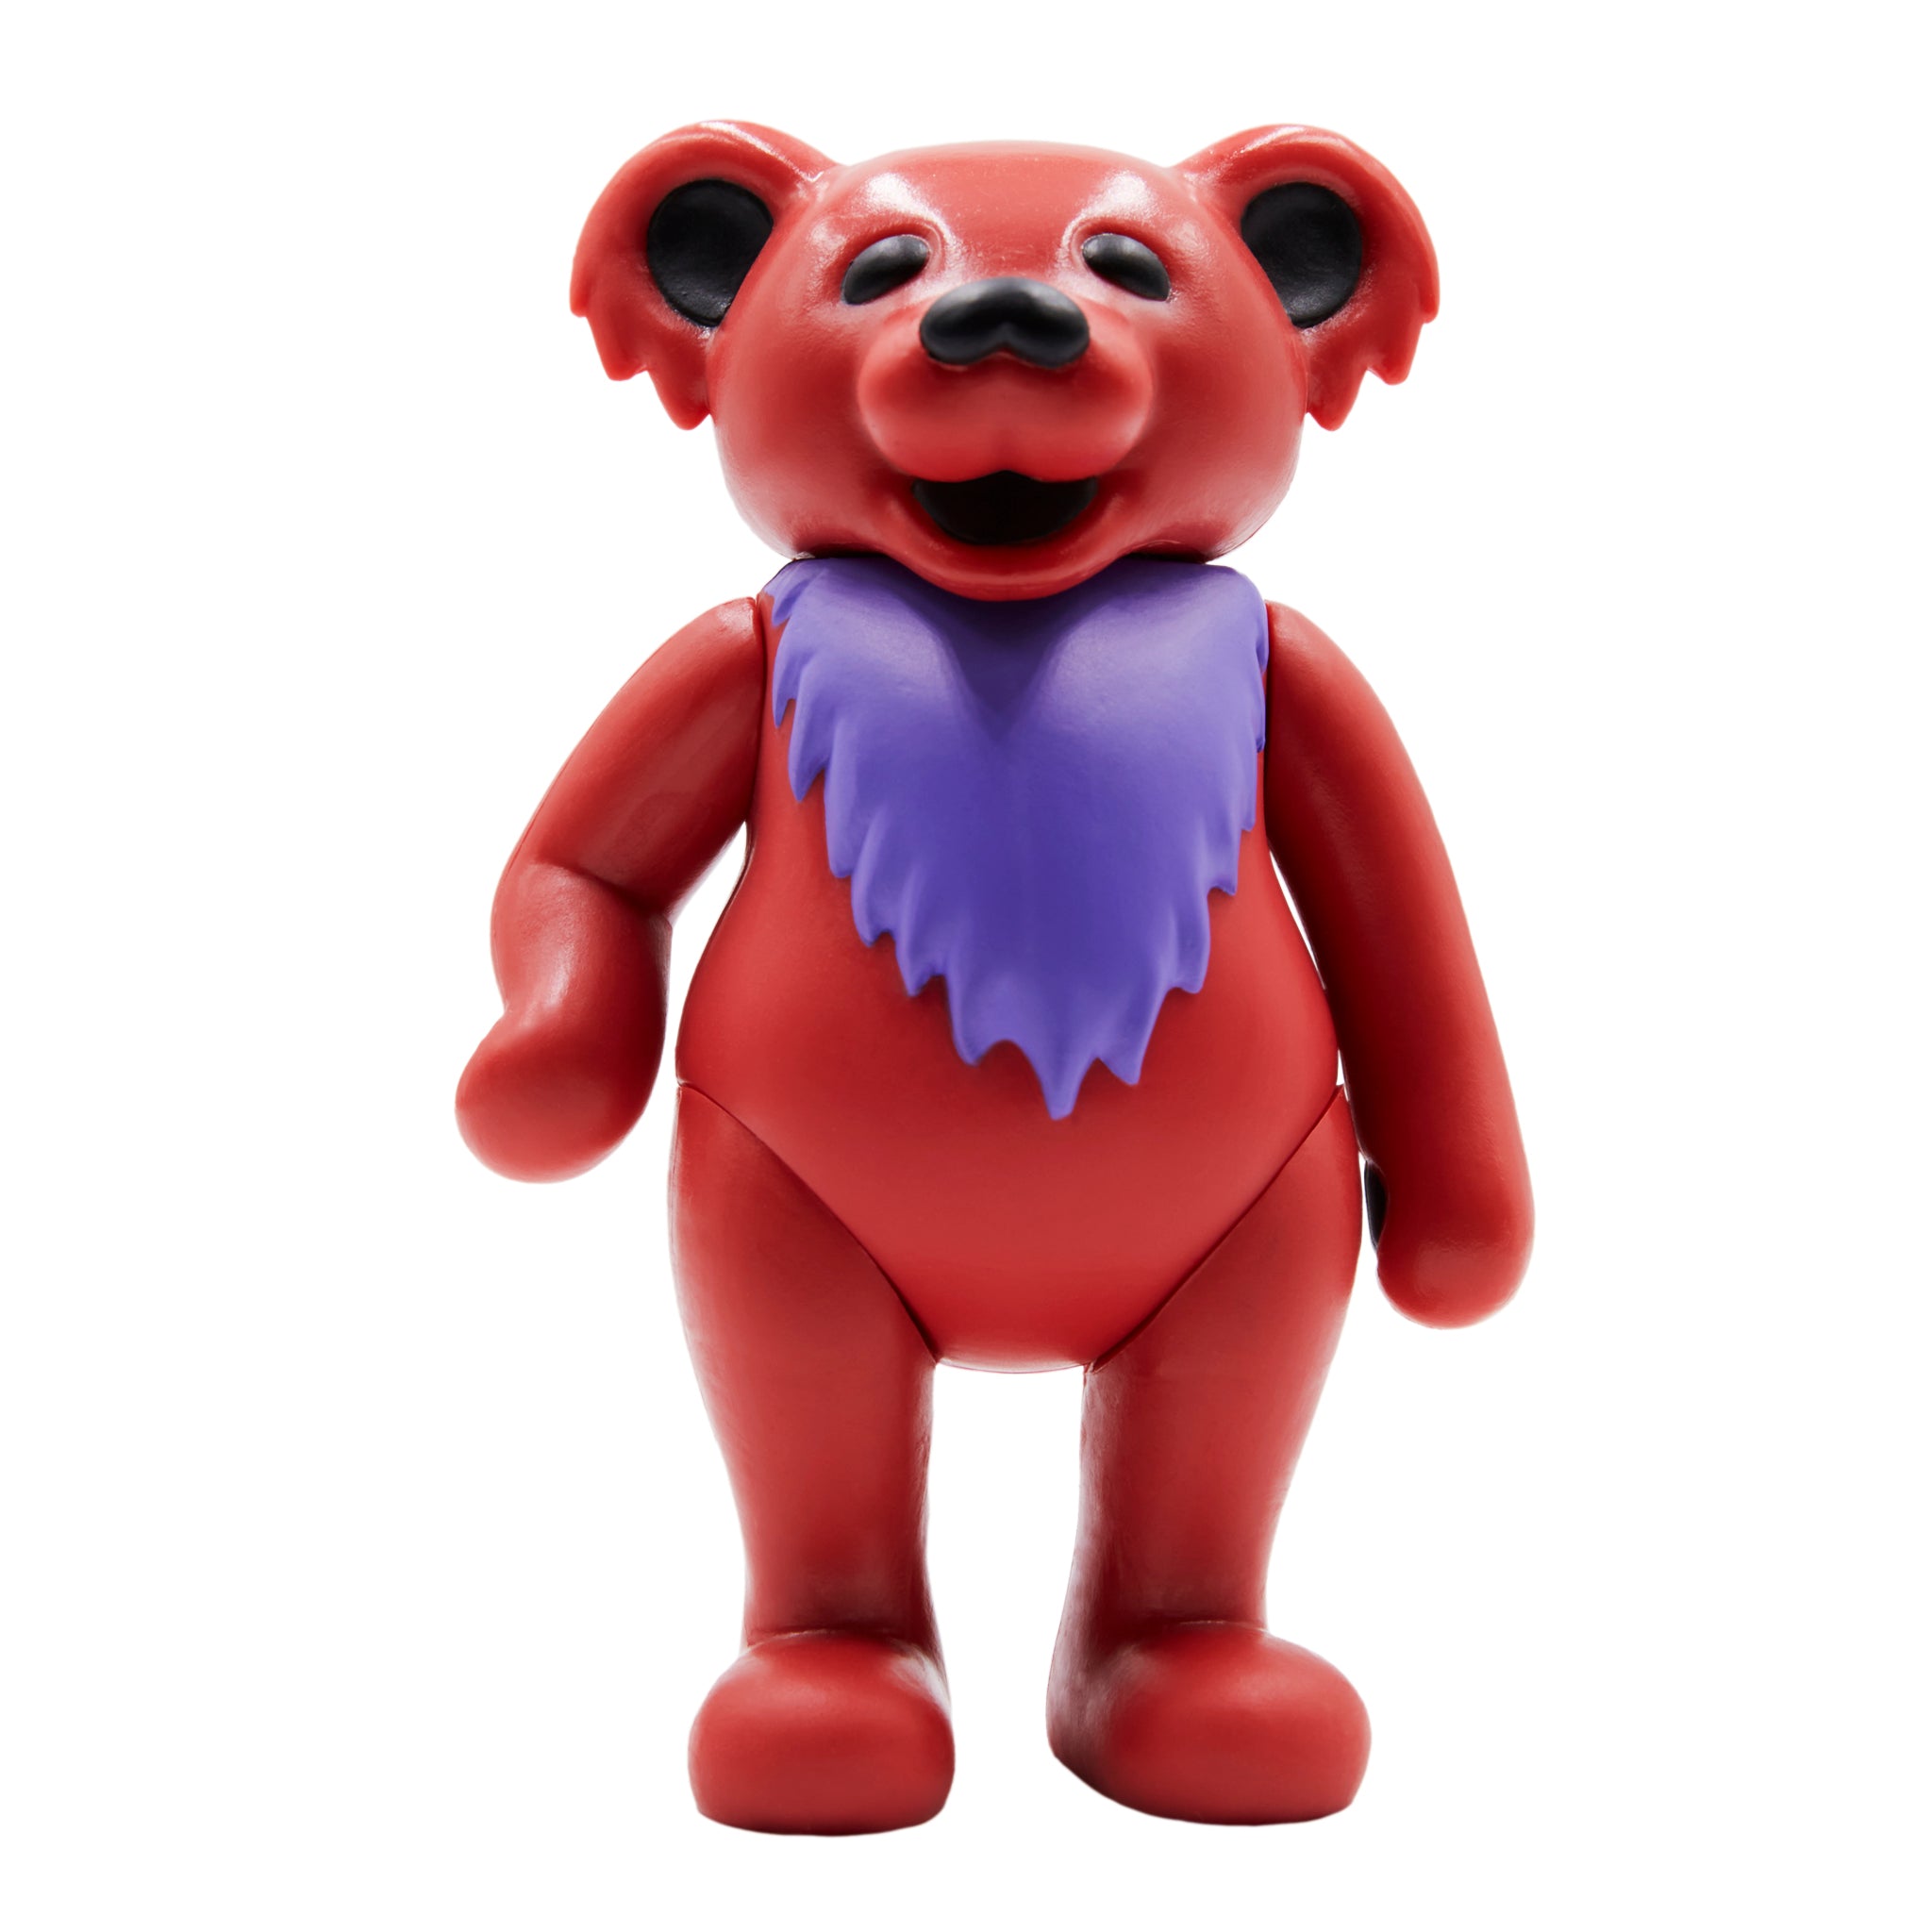 Grateful Dead Reaction Figure - Dancing Bear (Stealie Red)